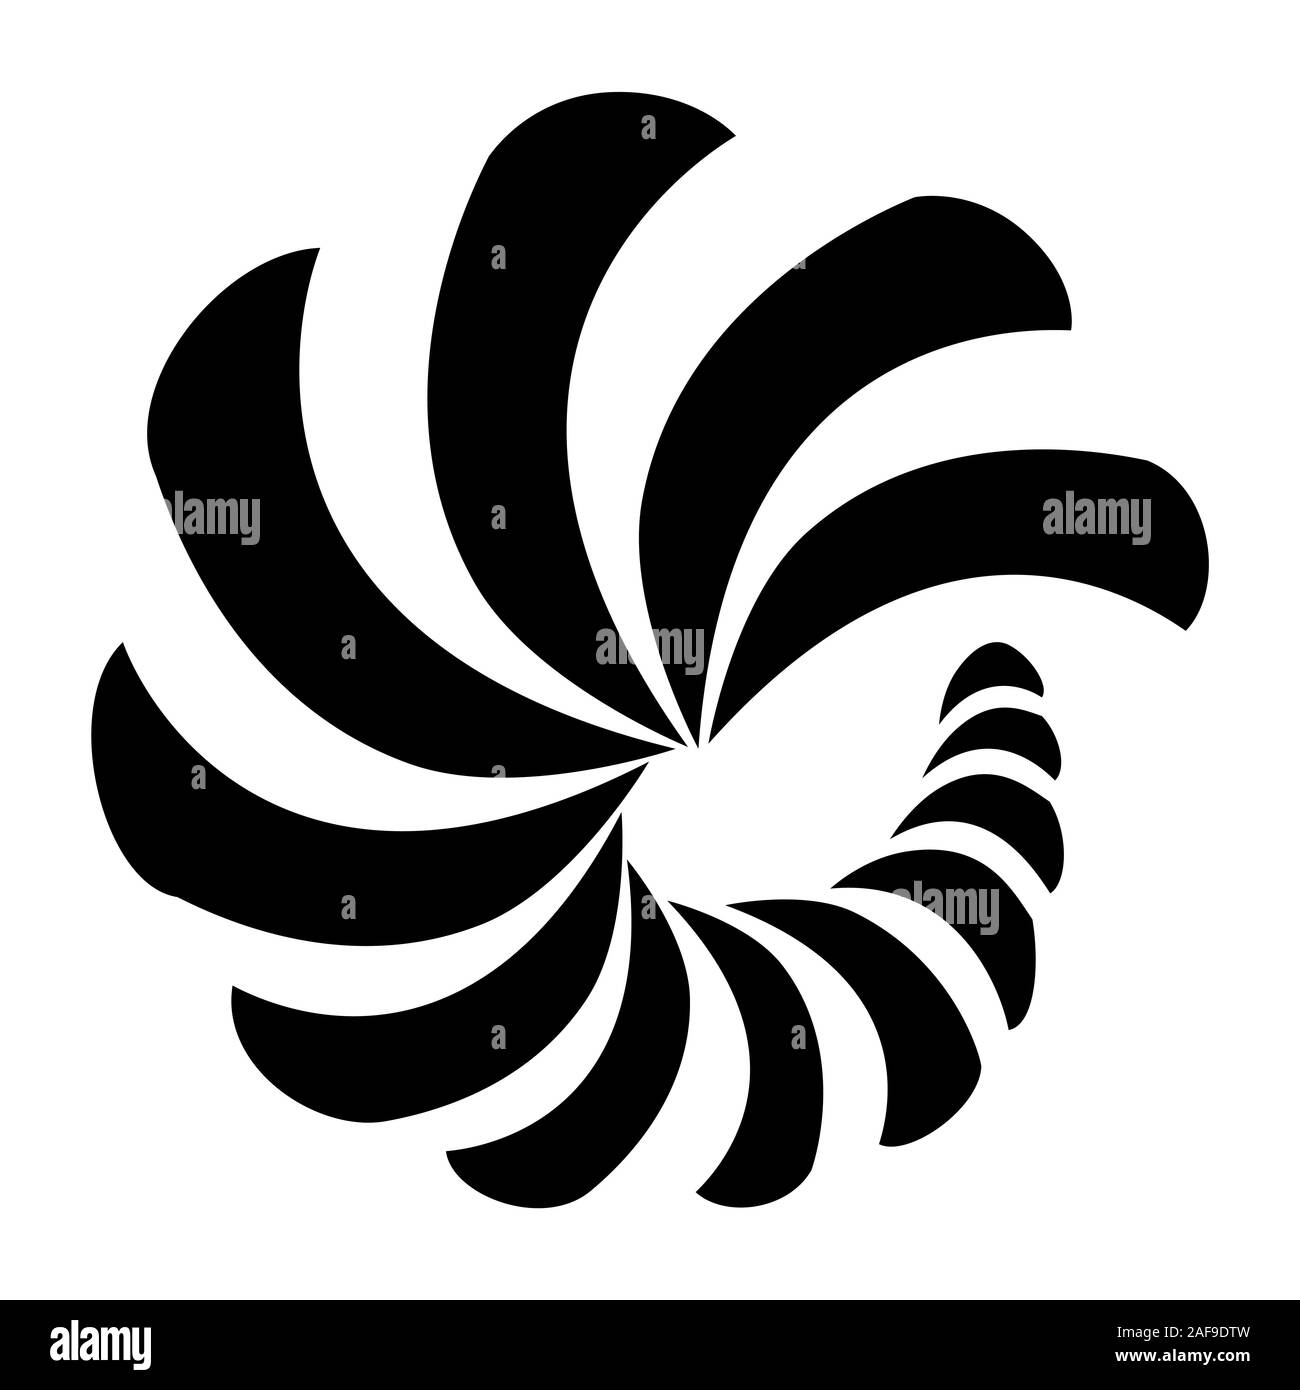 Maori Koru Nautilus Spiral Logo black New Zealand Kiwiana style Stock Vector